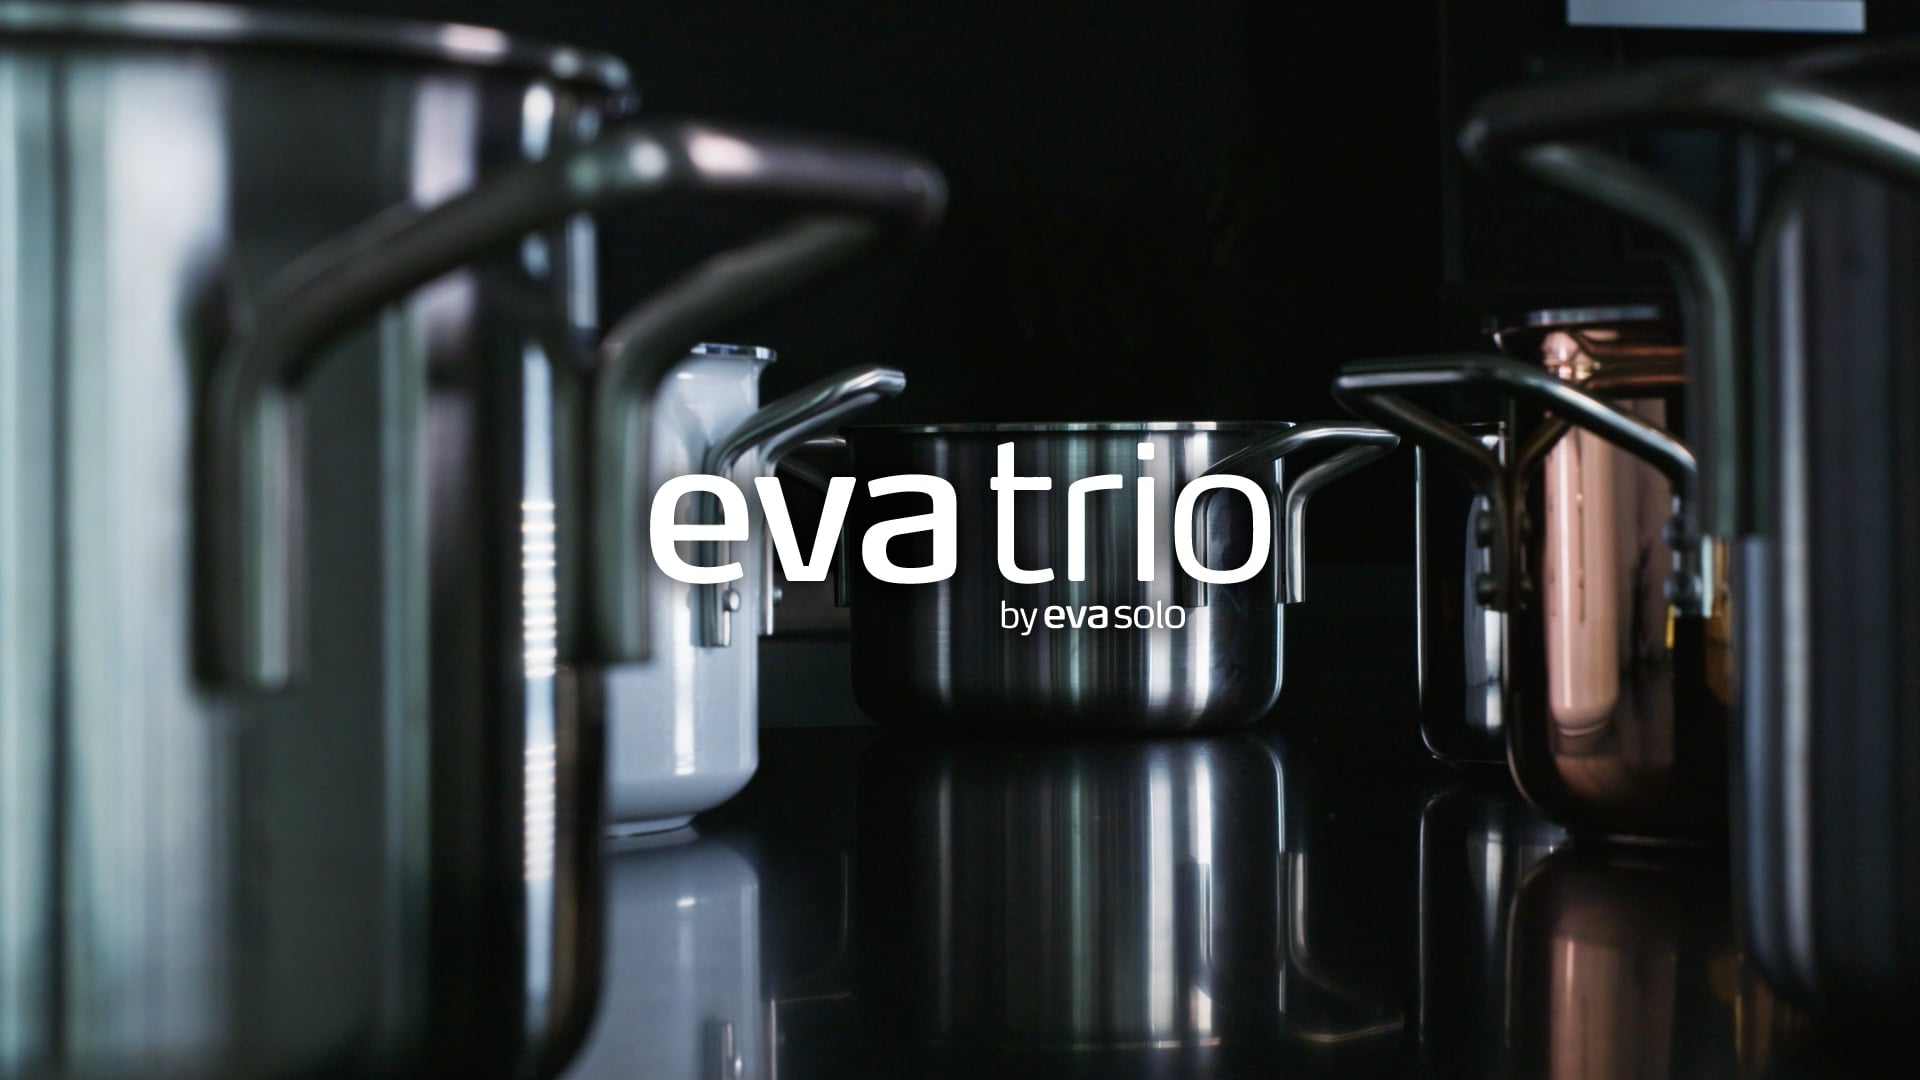 Eva Trio - Steel Line Recycled Cooking pot